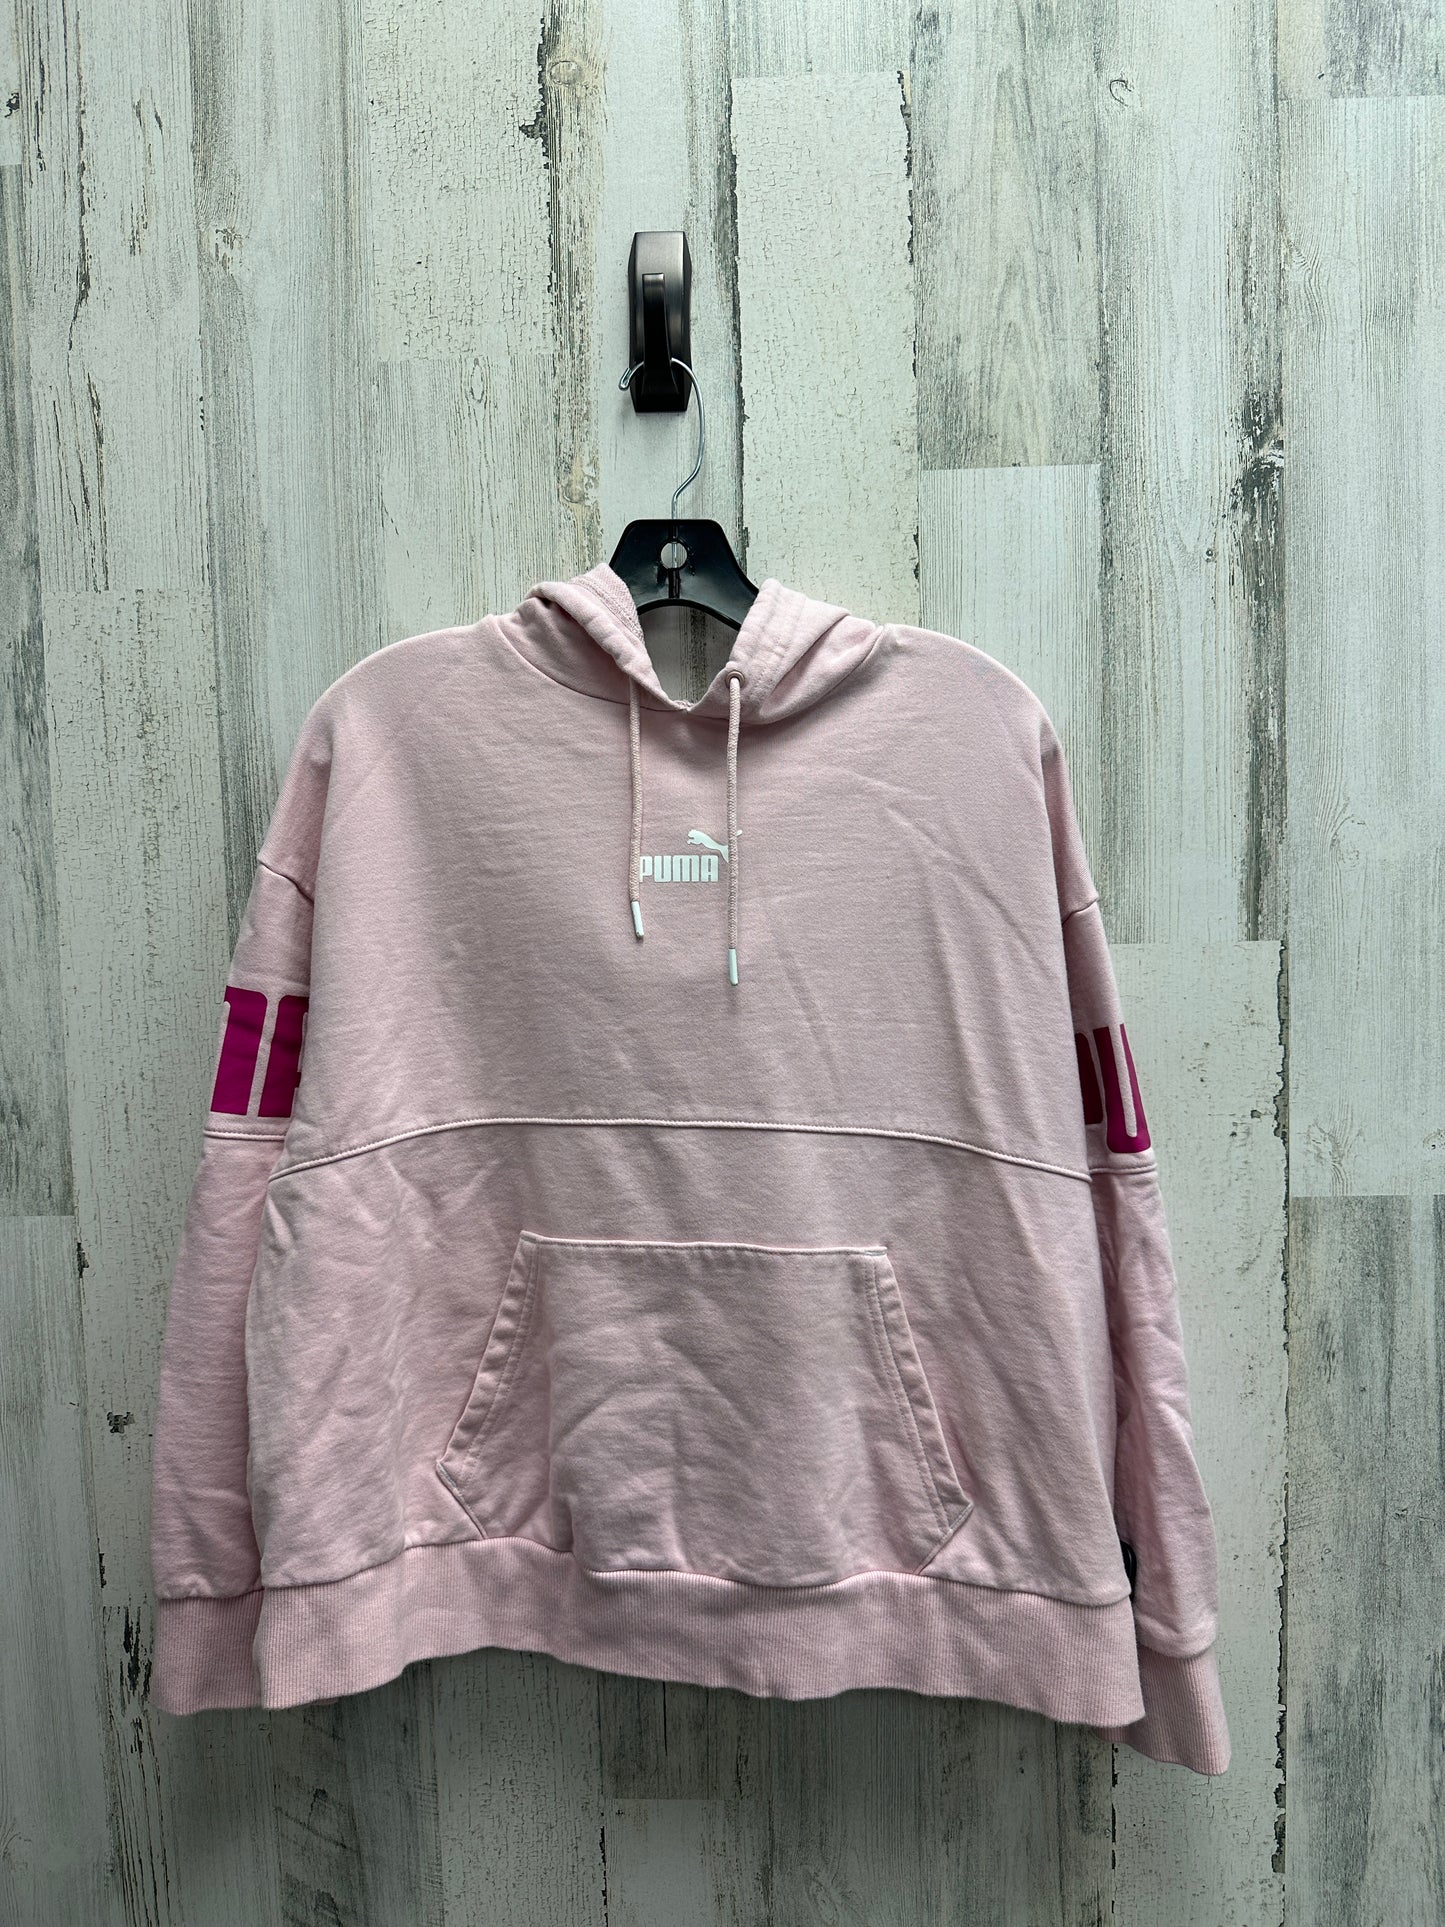 Athletic Sweatshirt Hoodie By Puma  Size: 2x